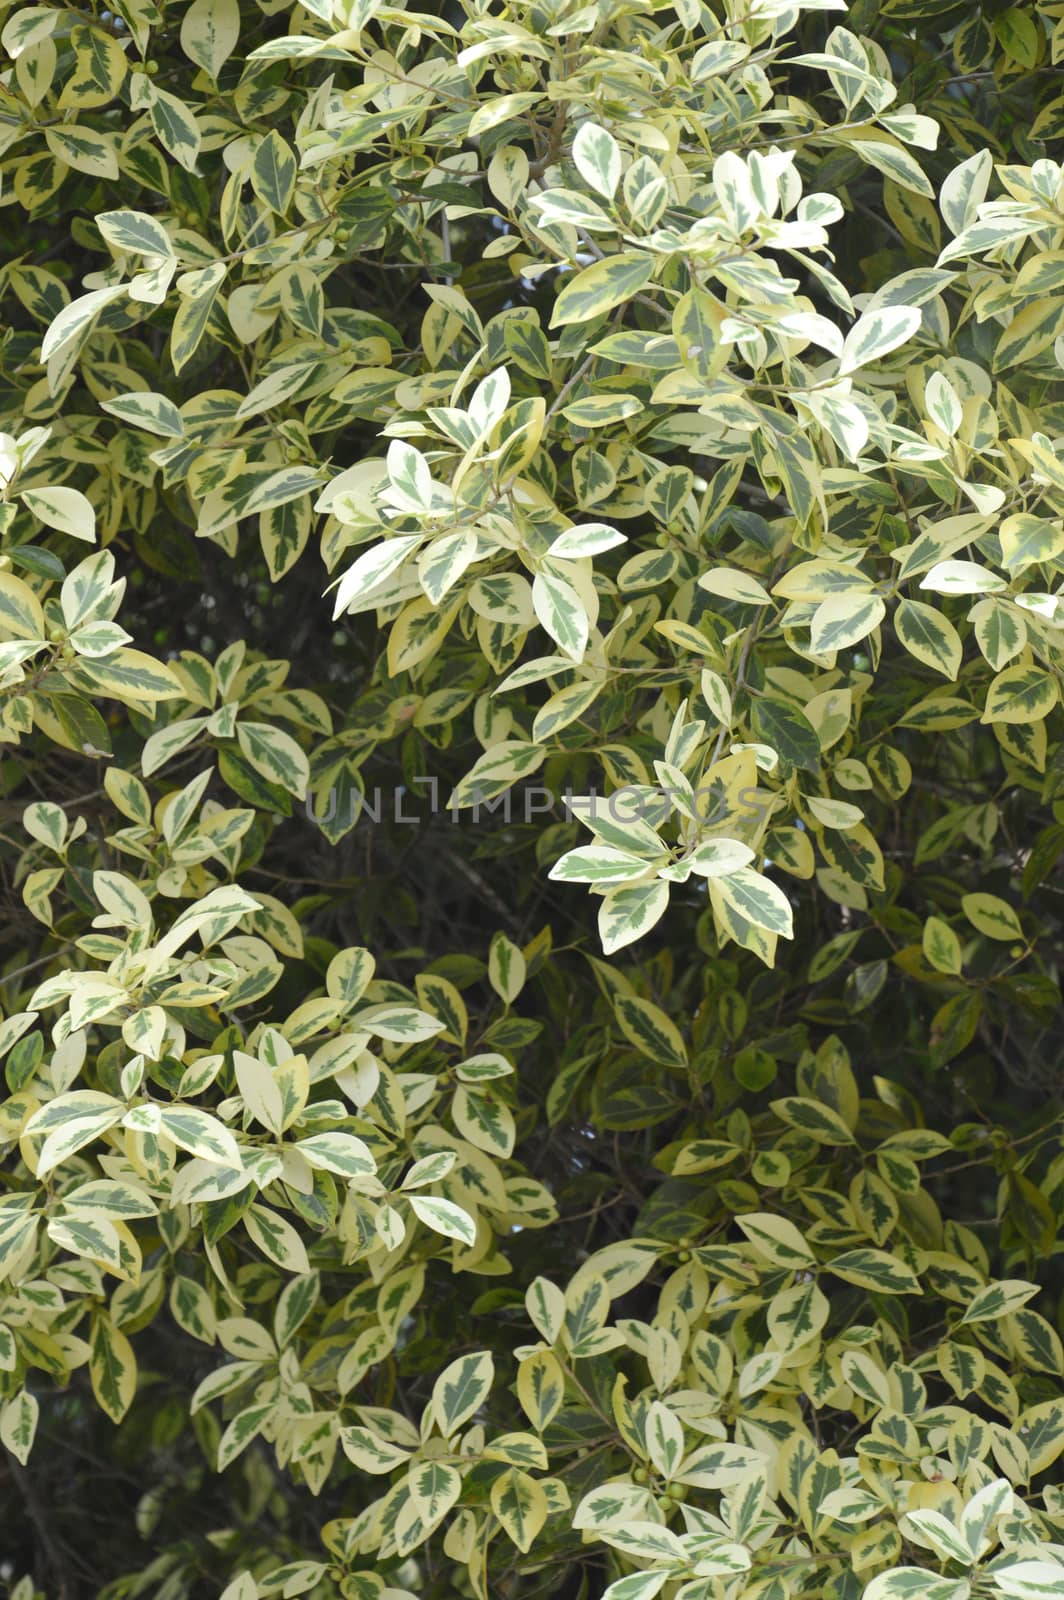 White Elm's variated leaves (Ulmus parvifolia 'Variegata')